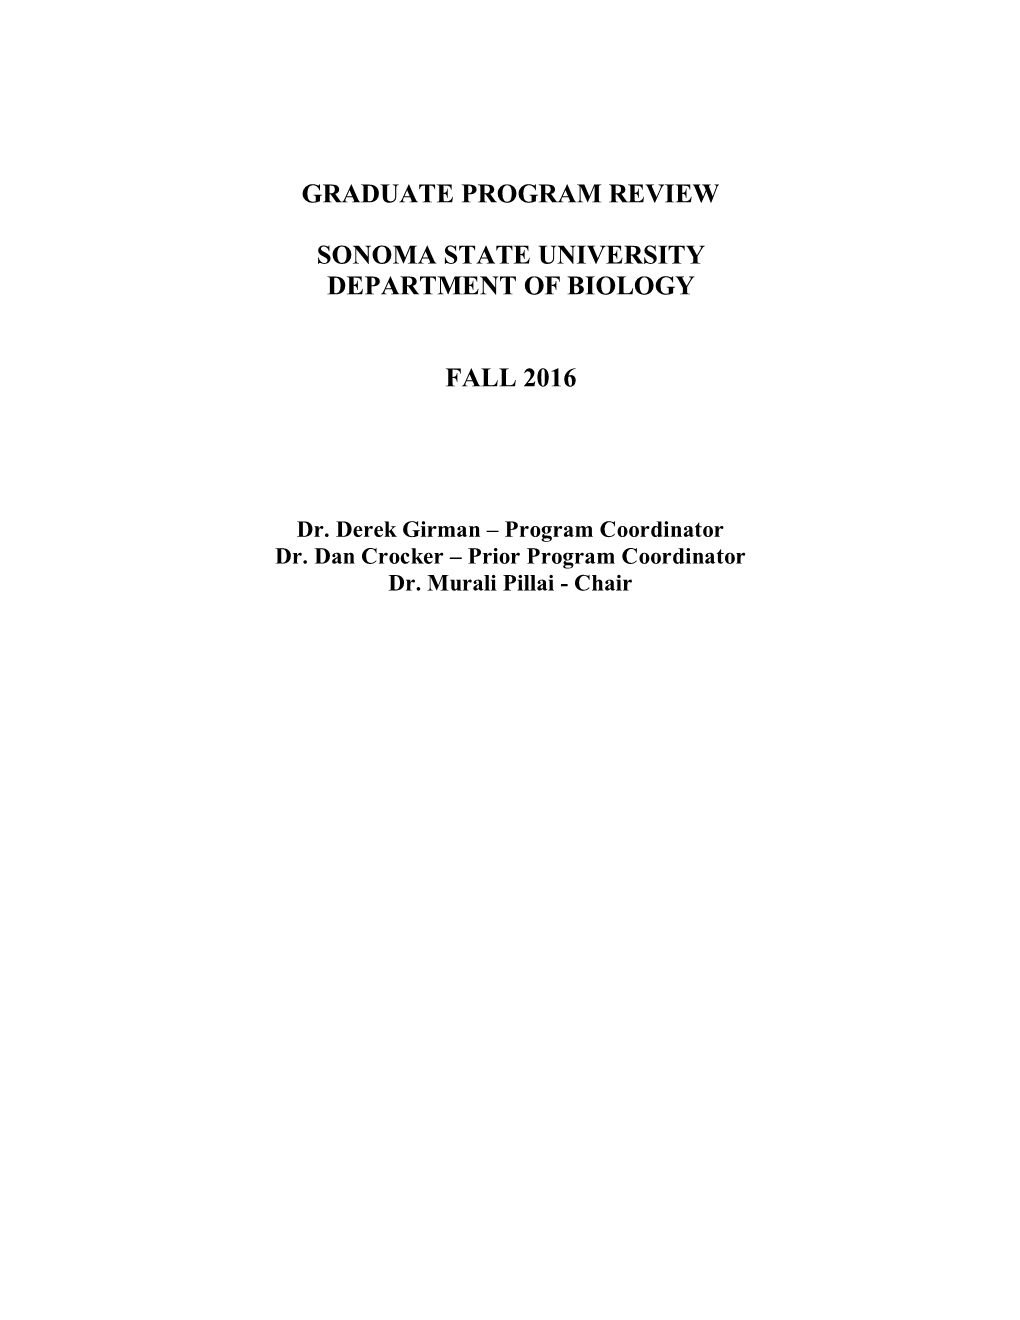 Graduate Program Review Sonoma State